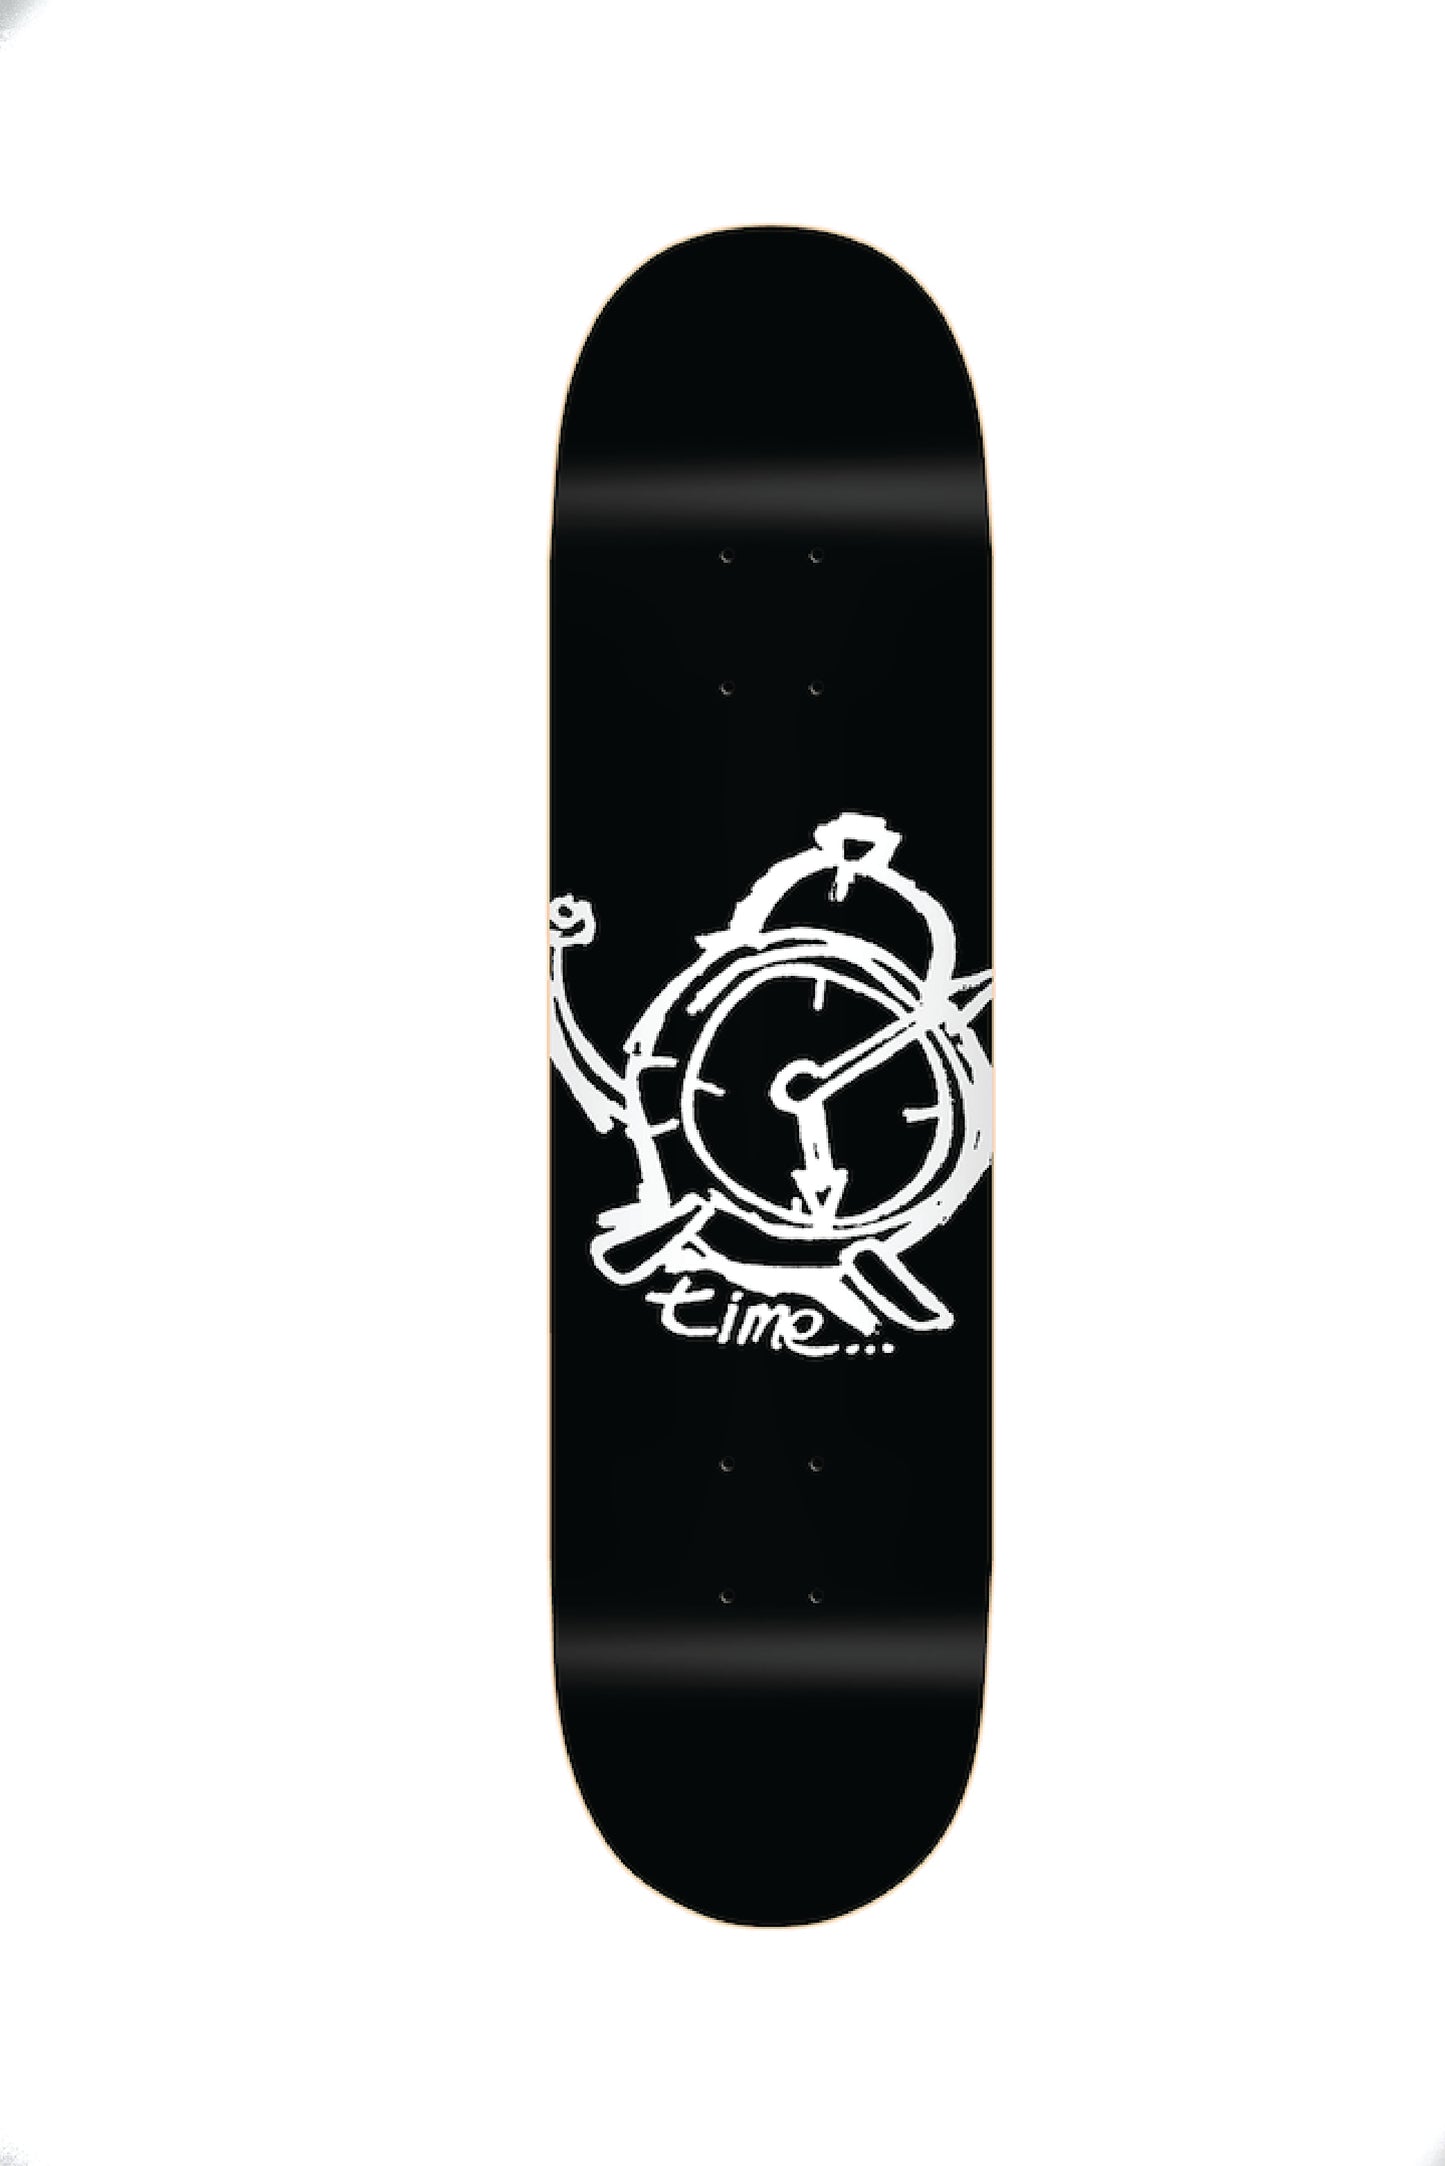 Time Skateboards - OG Clock - White Ink On Black